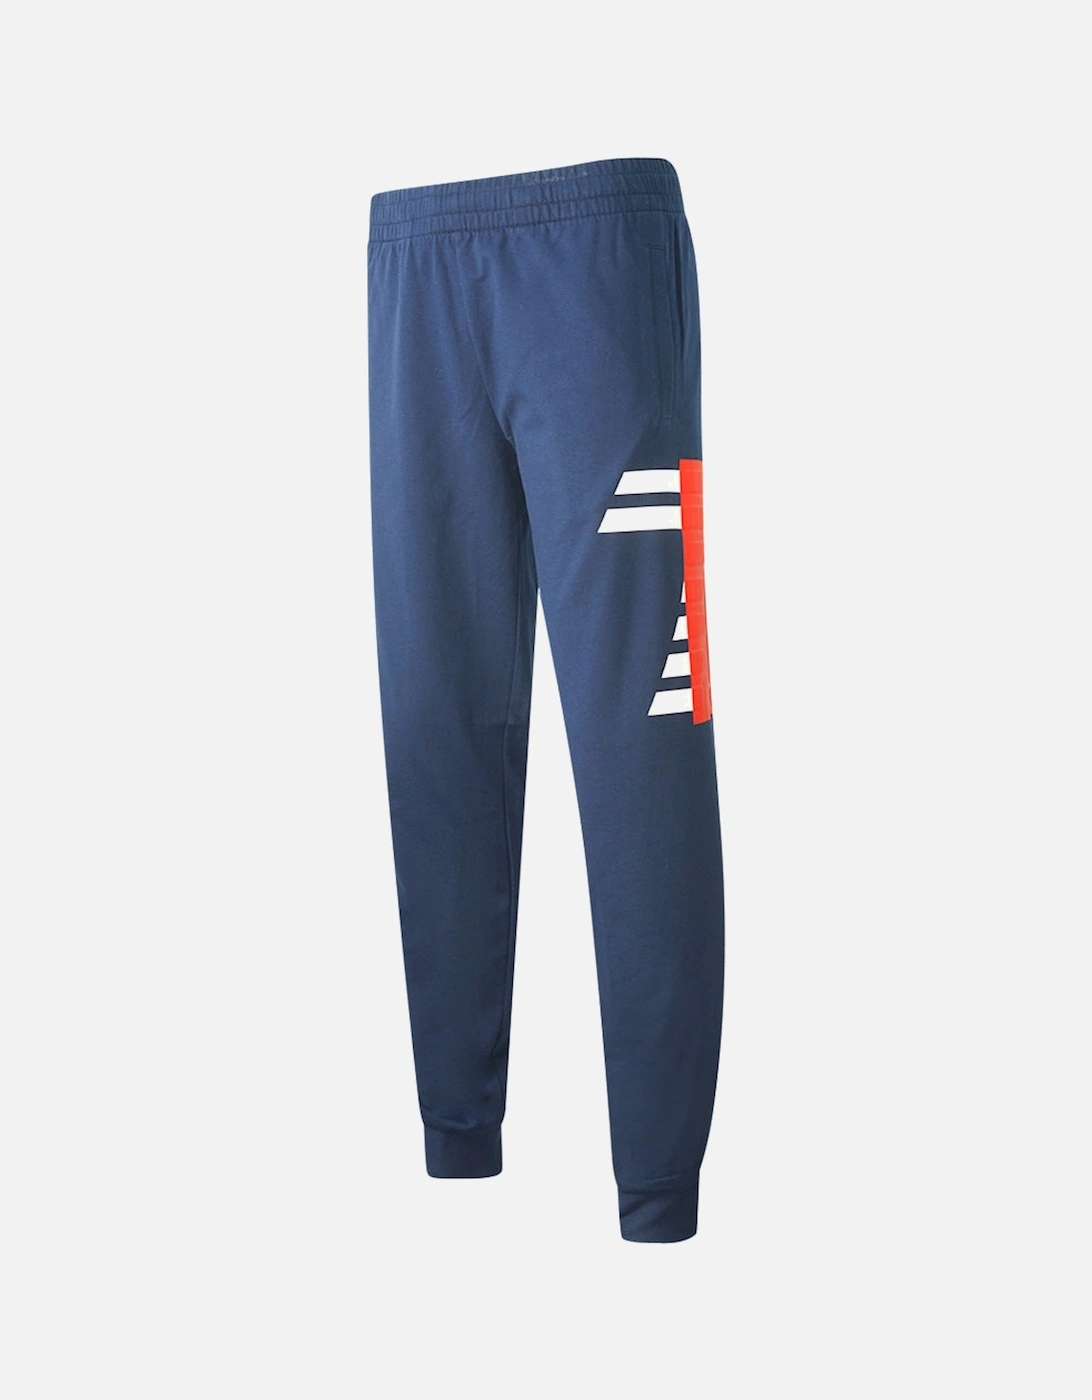 No 7 Logo Navy Blue Sweat Pants